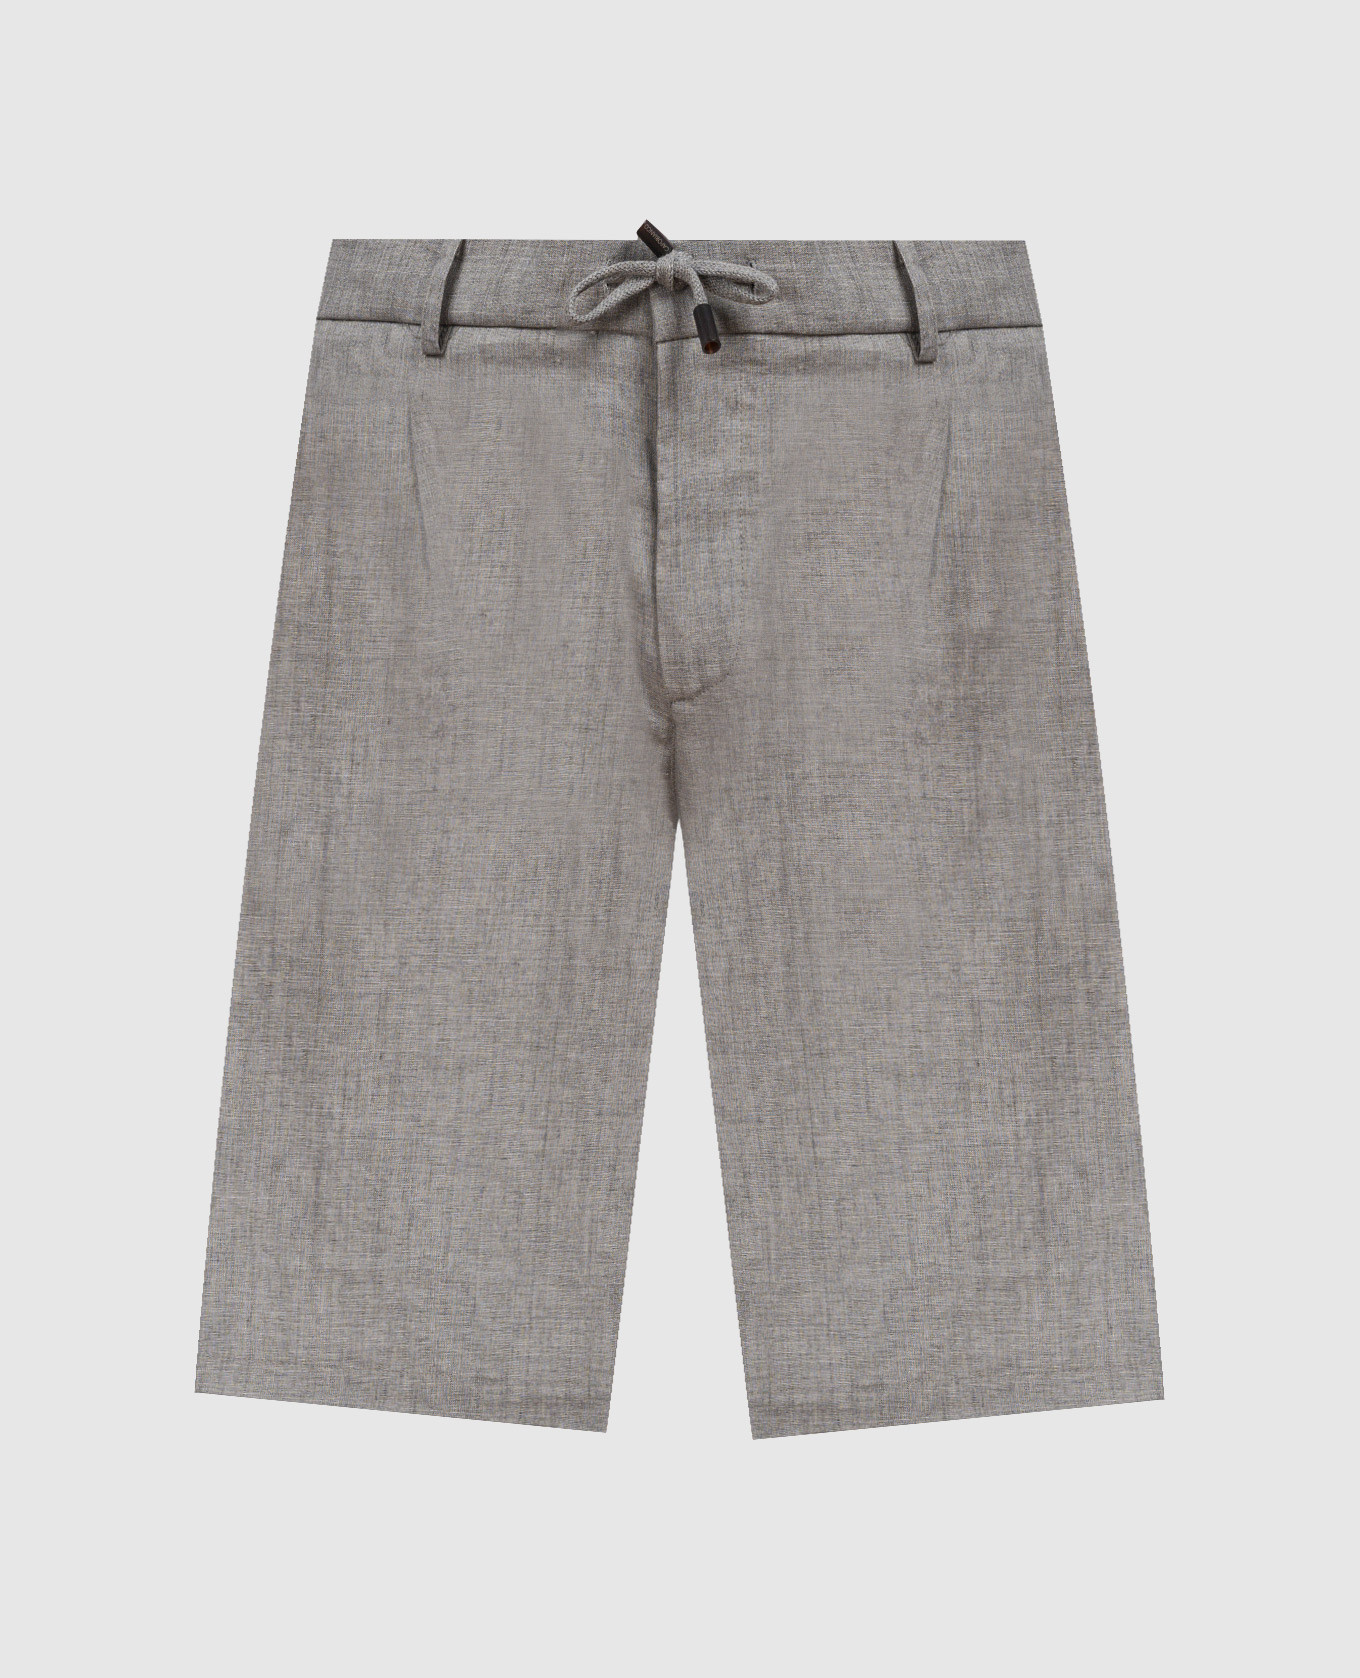 Gray linen shorts